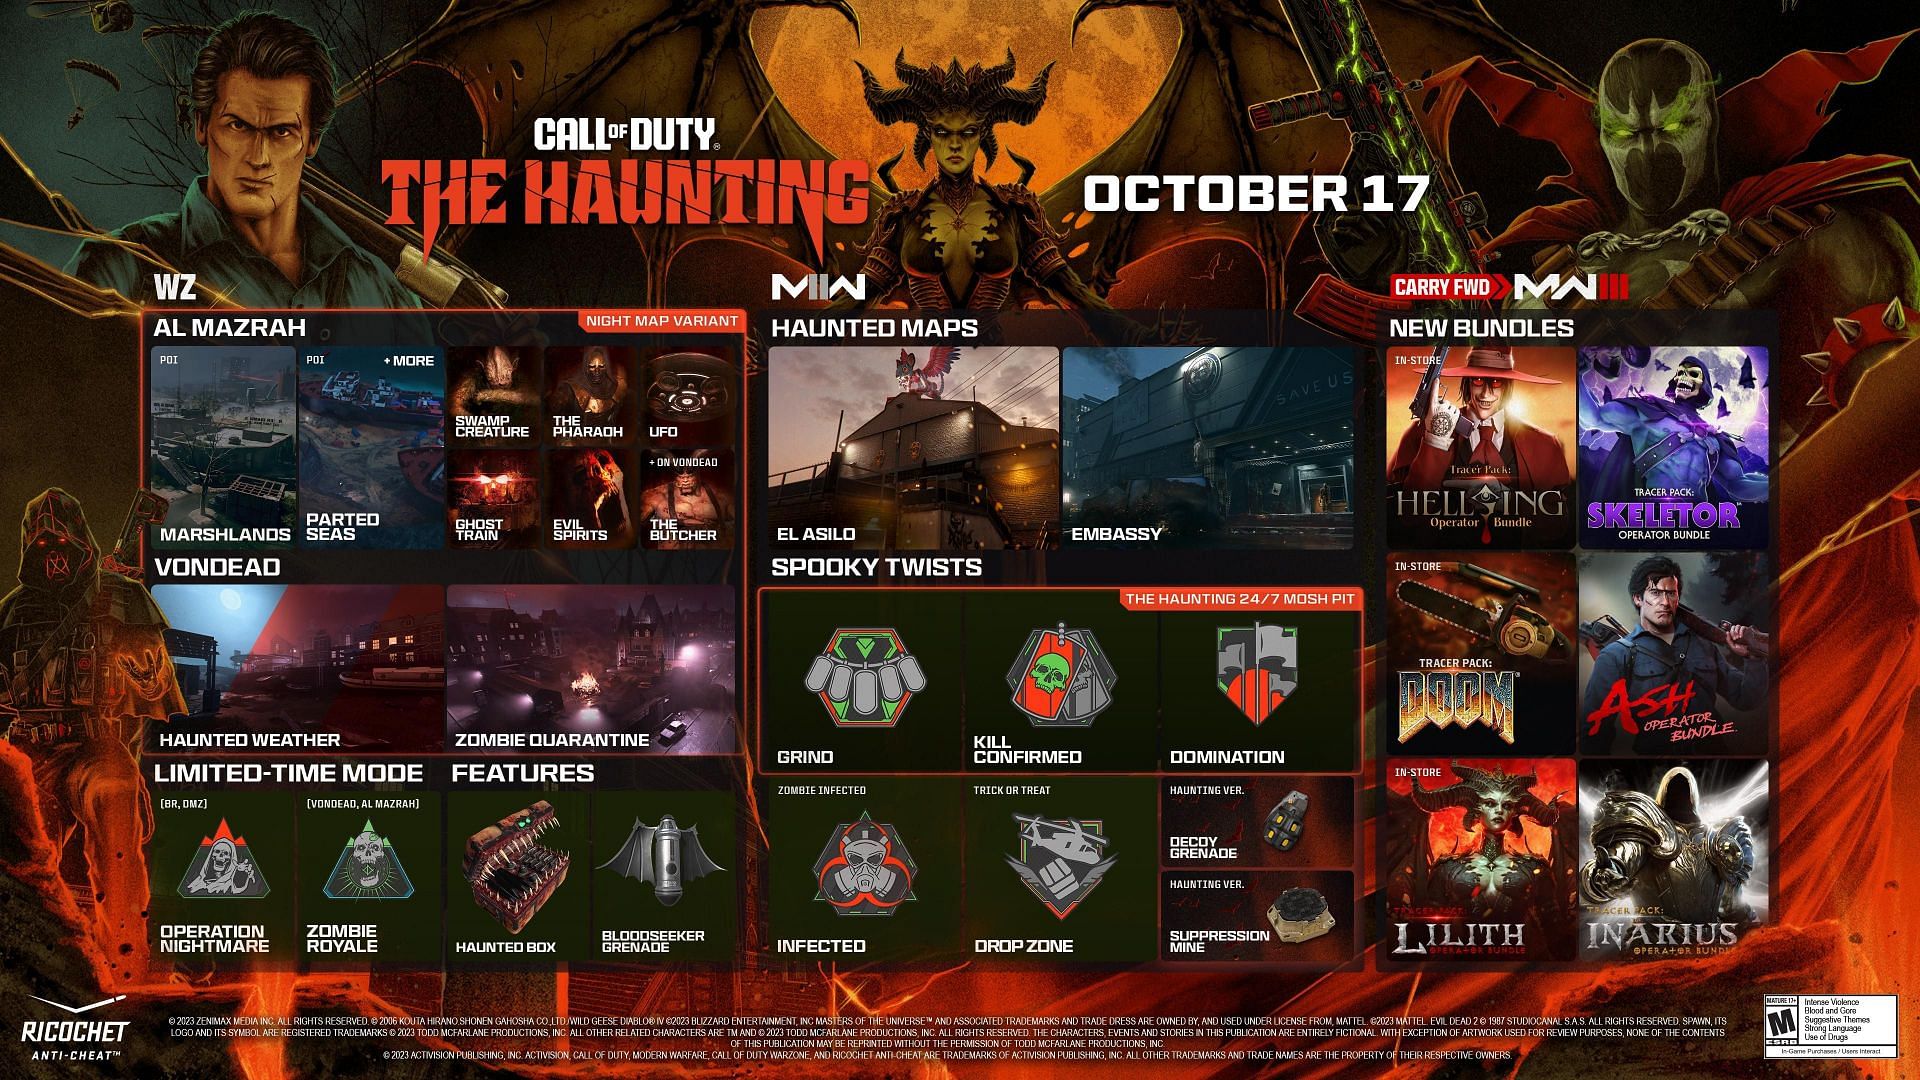 The Haunting roadmap (Image via Activision)